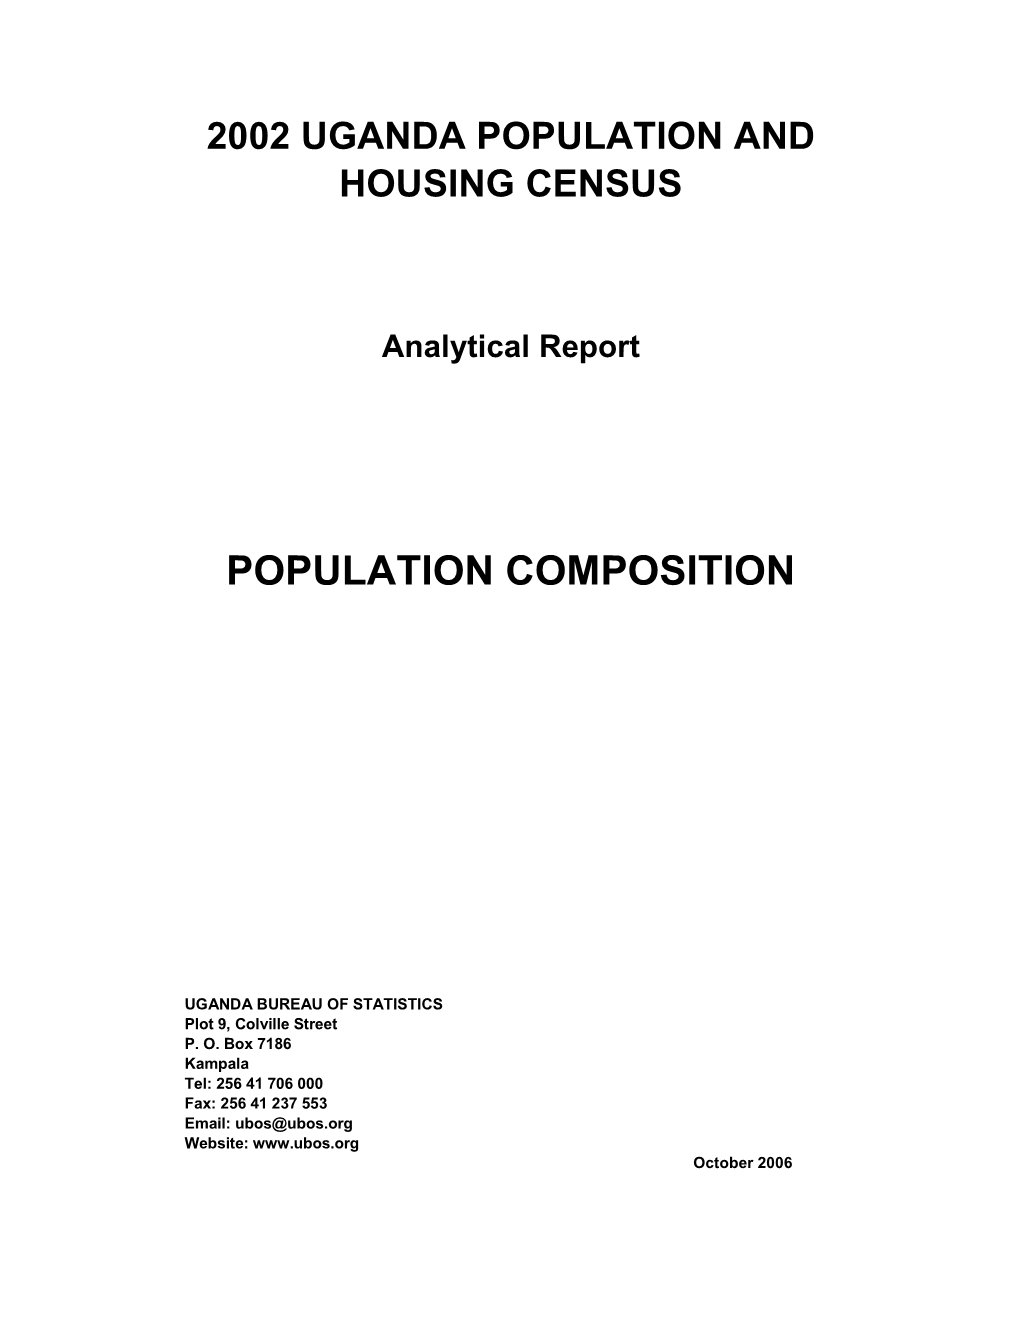 Population Composition